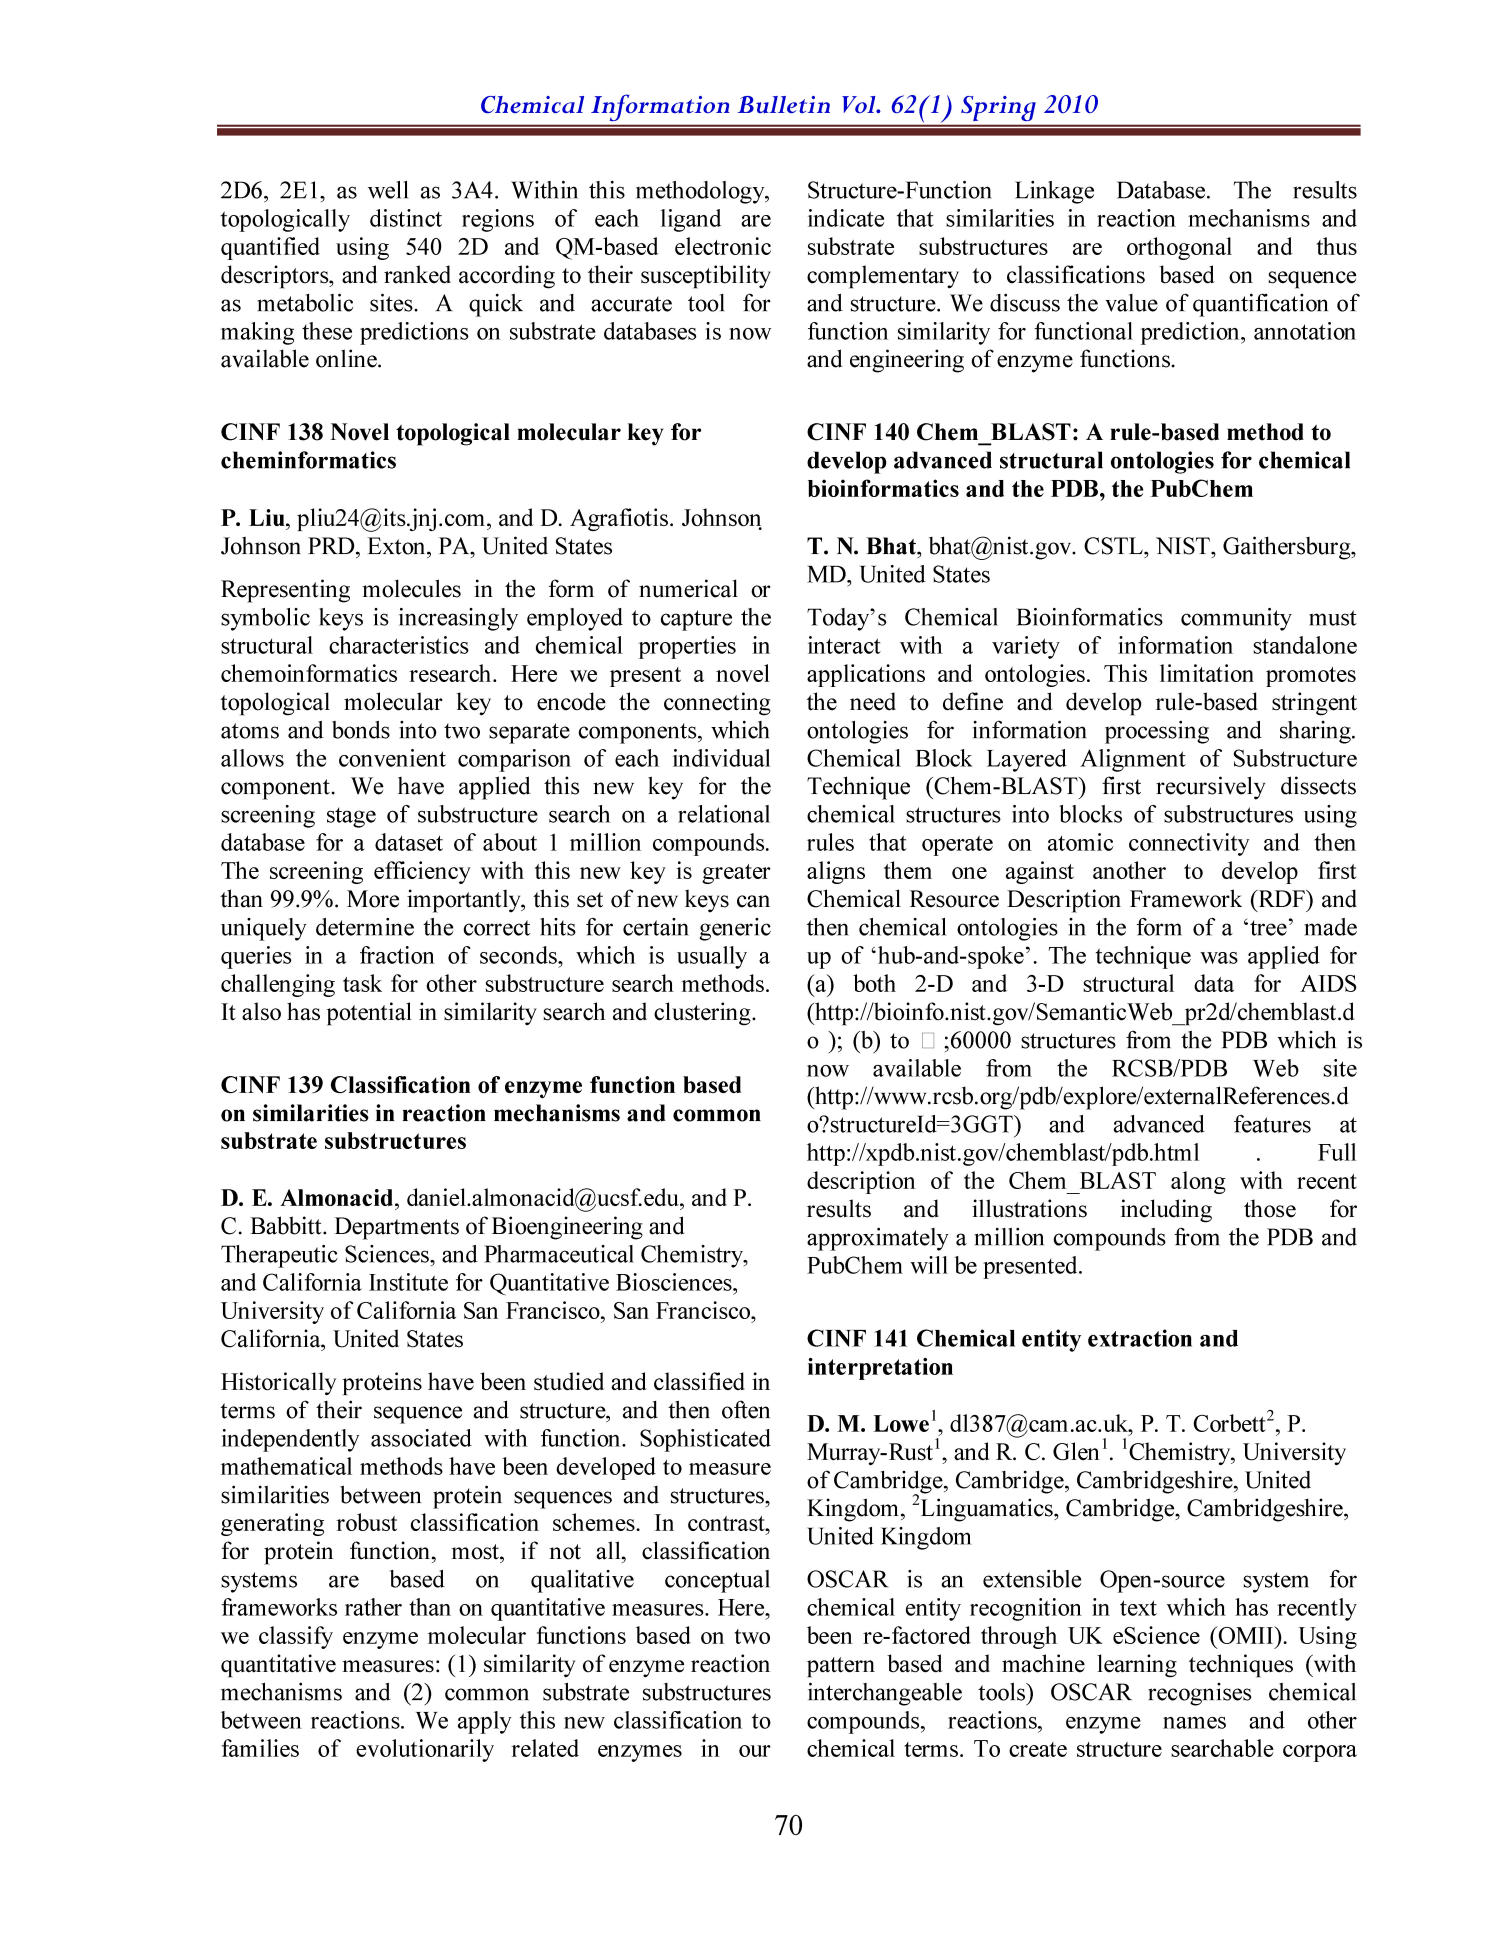 Chemical Information Bulletin, Volume 62, Number 1, Spring 2010
                                                
                                                    70
                                                